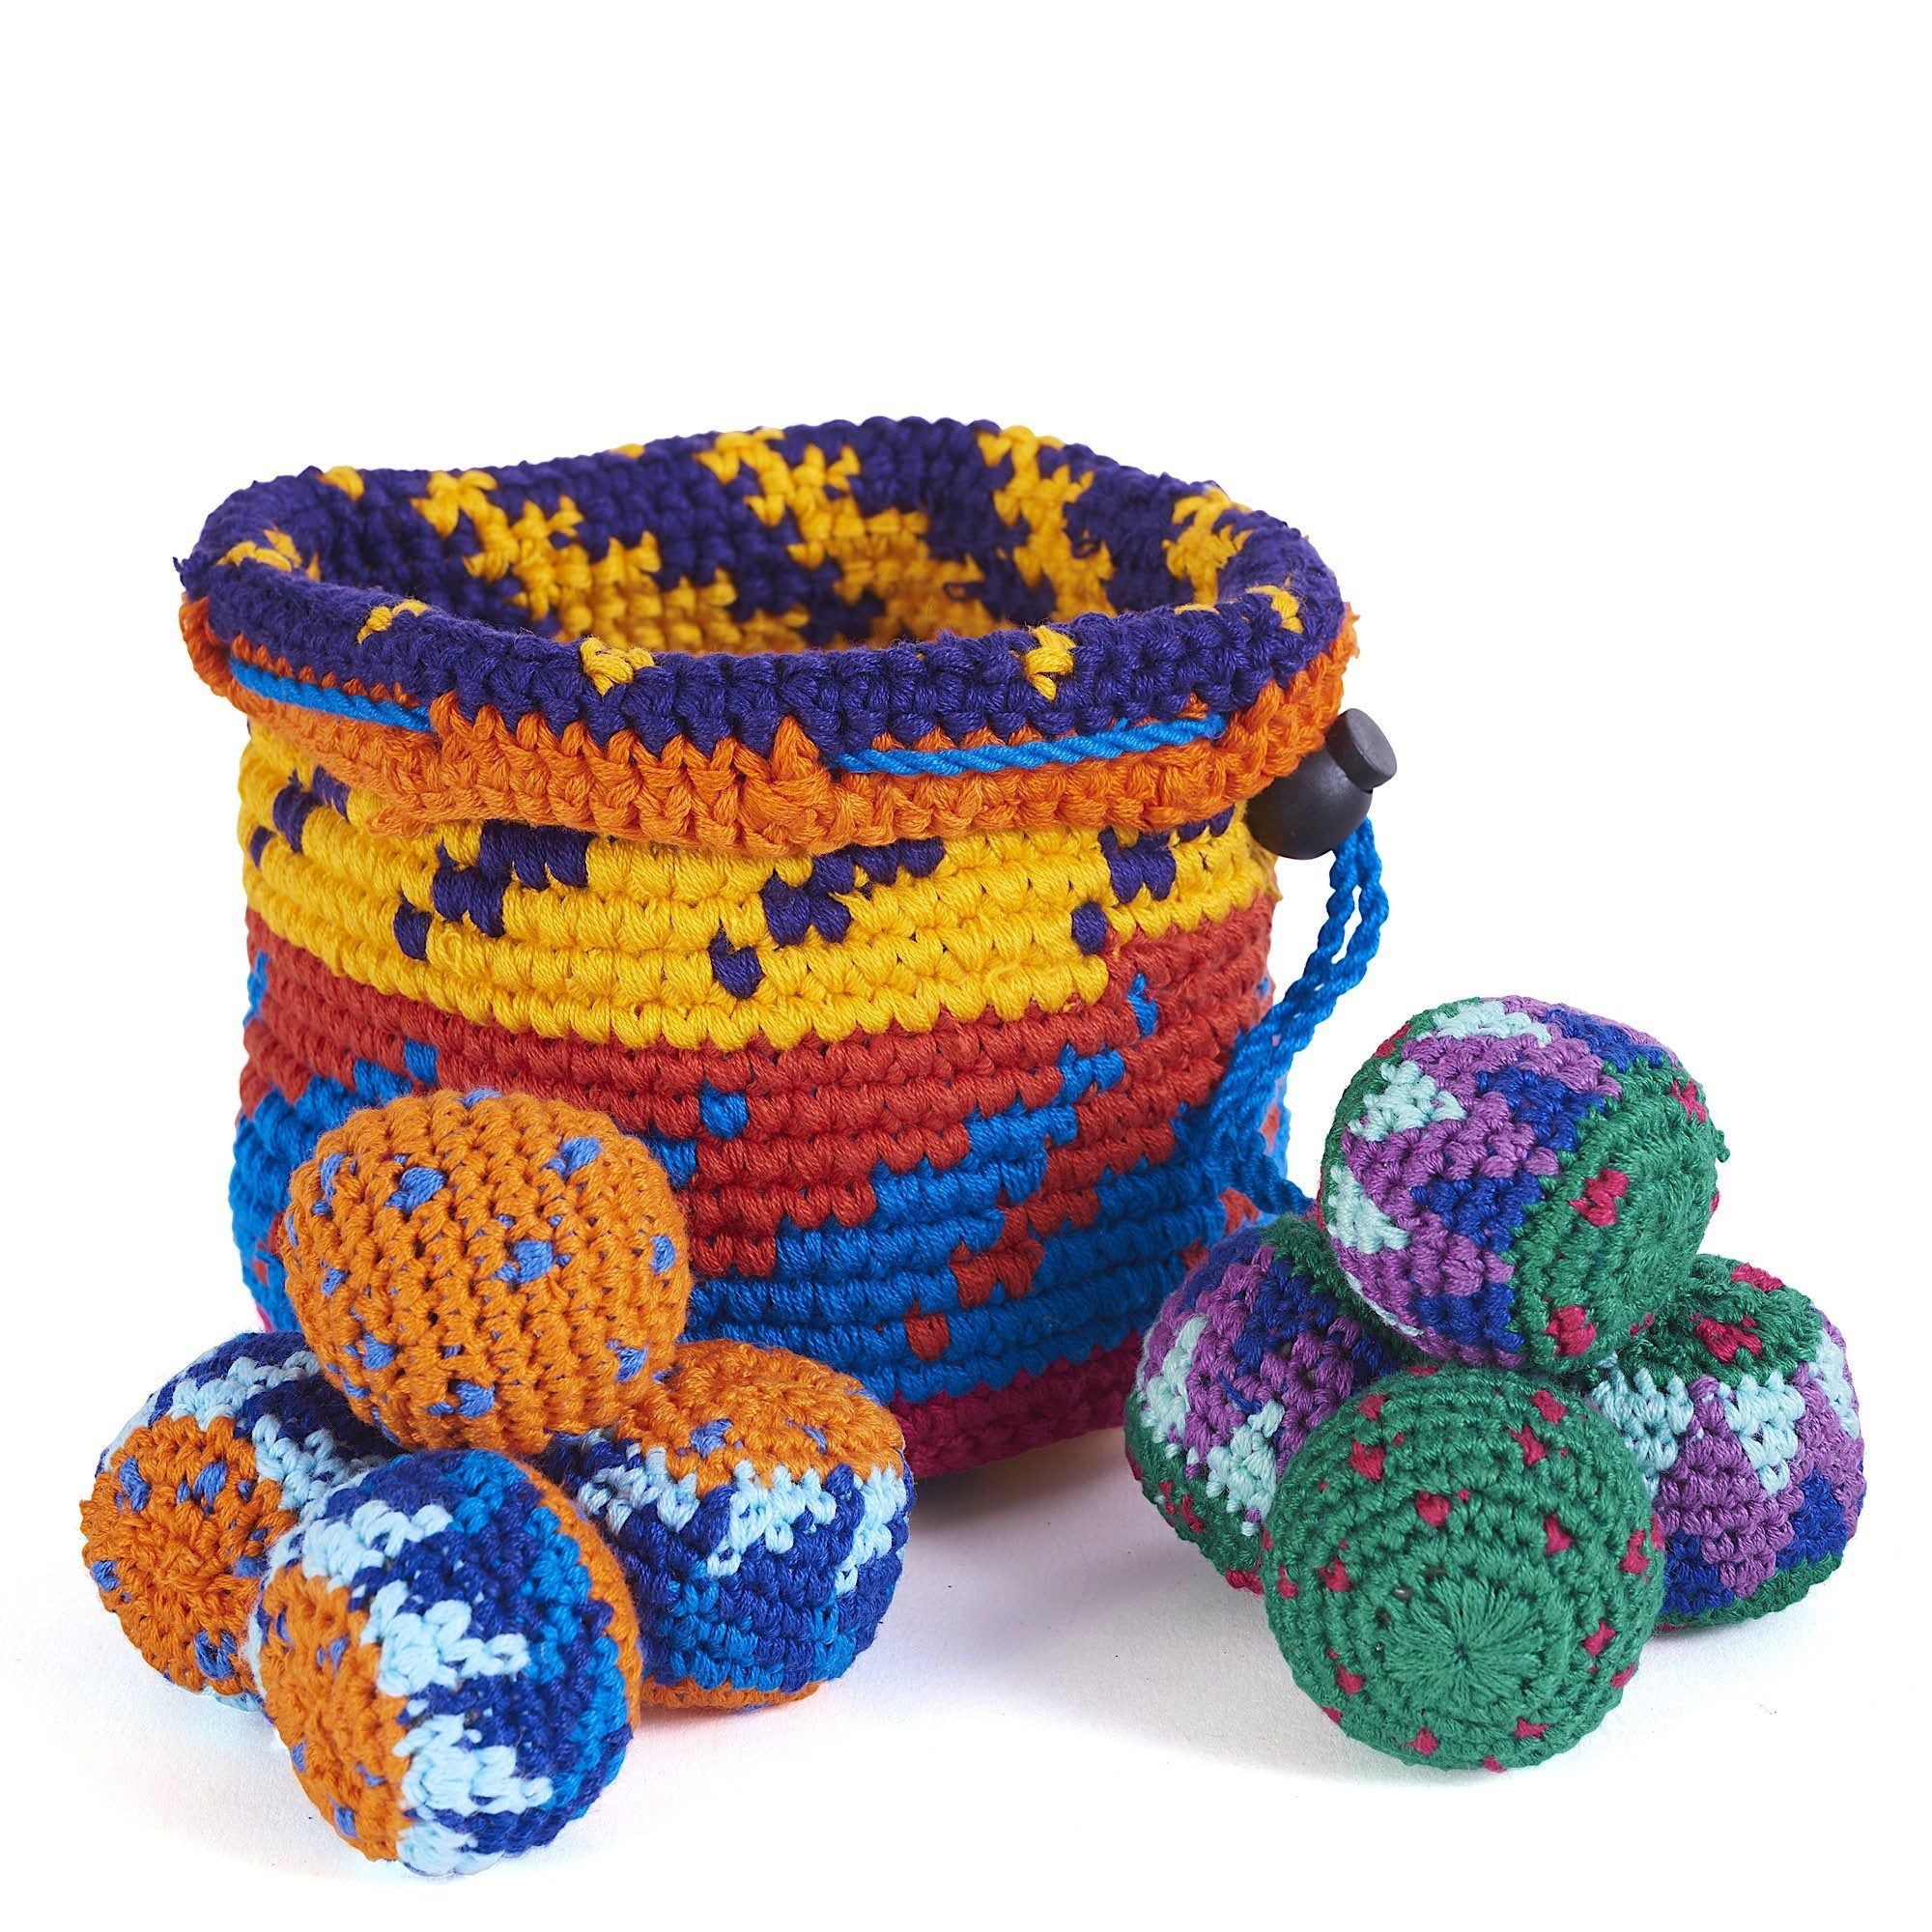 YippiYappa Buena Onda Experience | Handmade, Fair Trade, Crochet, Knit, Cloth Toys, Indoor, Outdoor Games, Party, Backyard Games, Sports, Beach Lake Toys